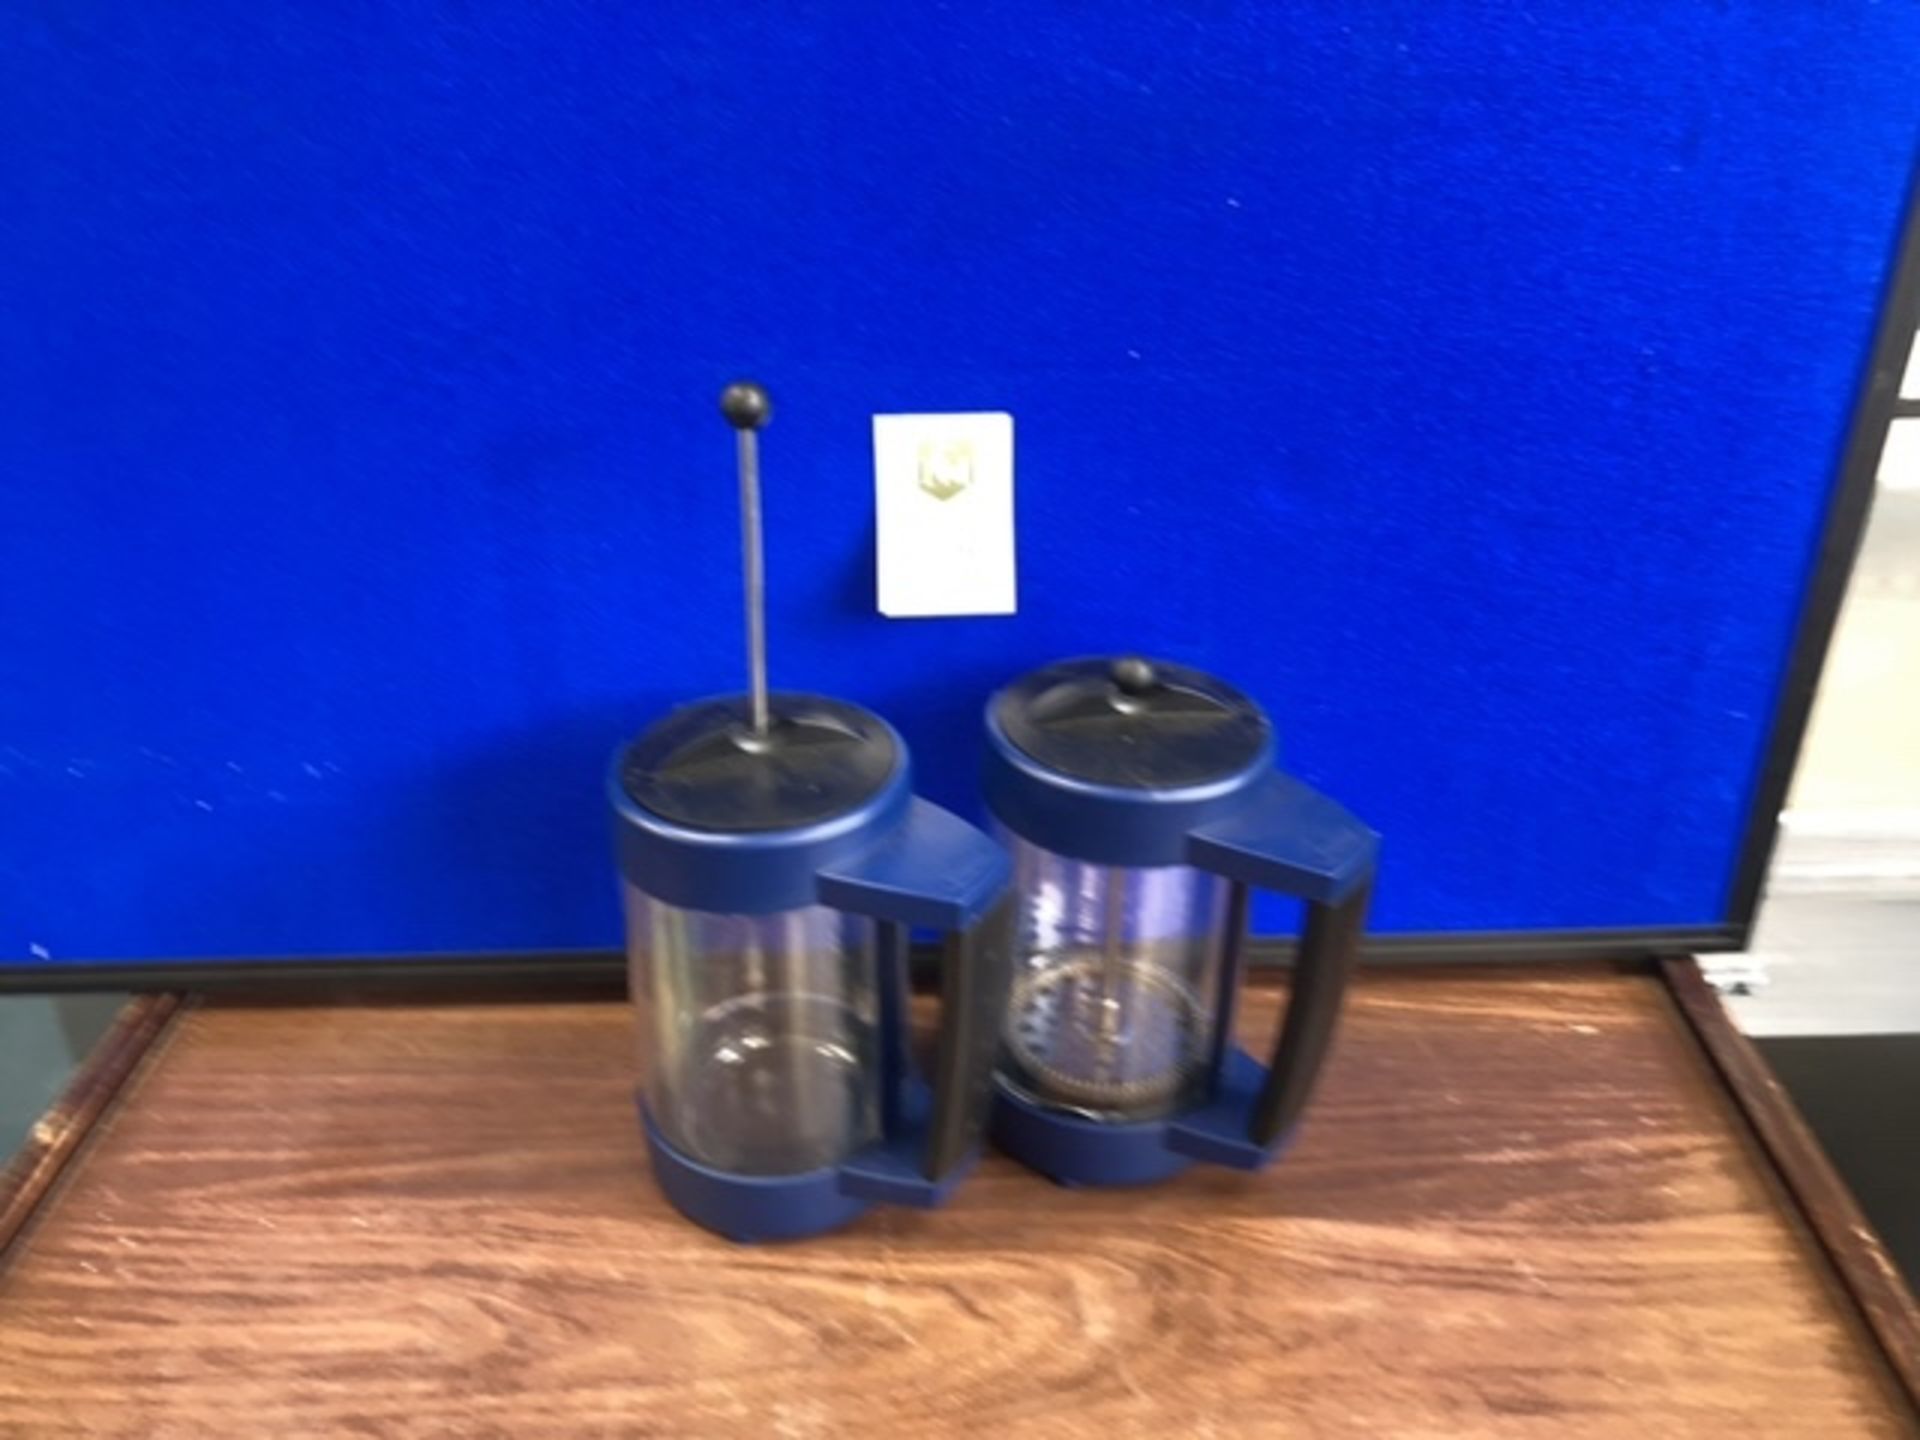 Coffee pots